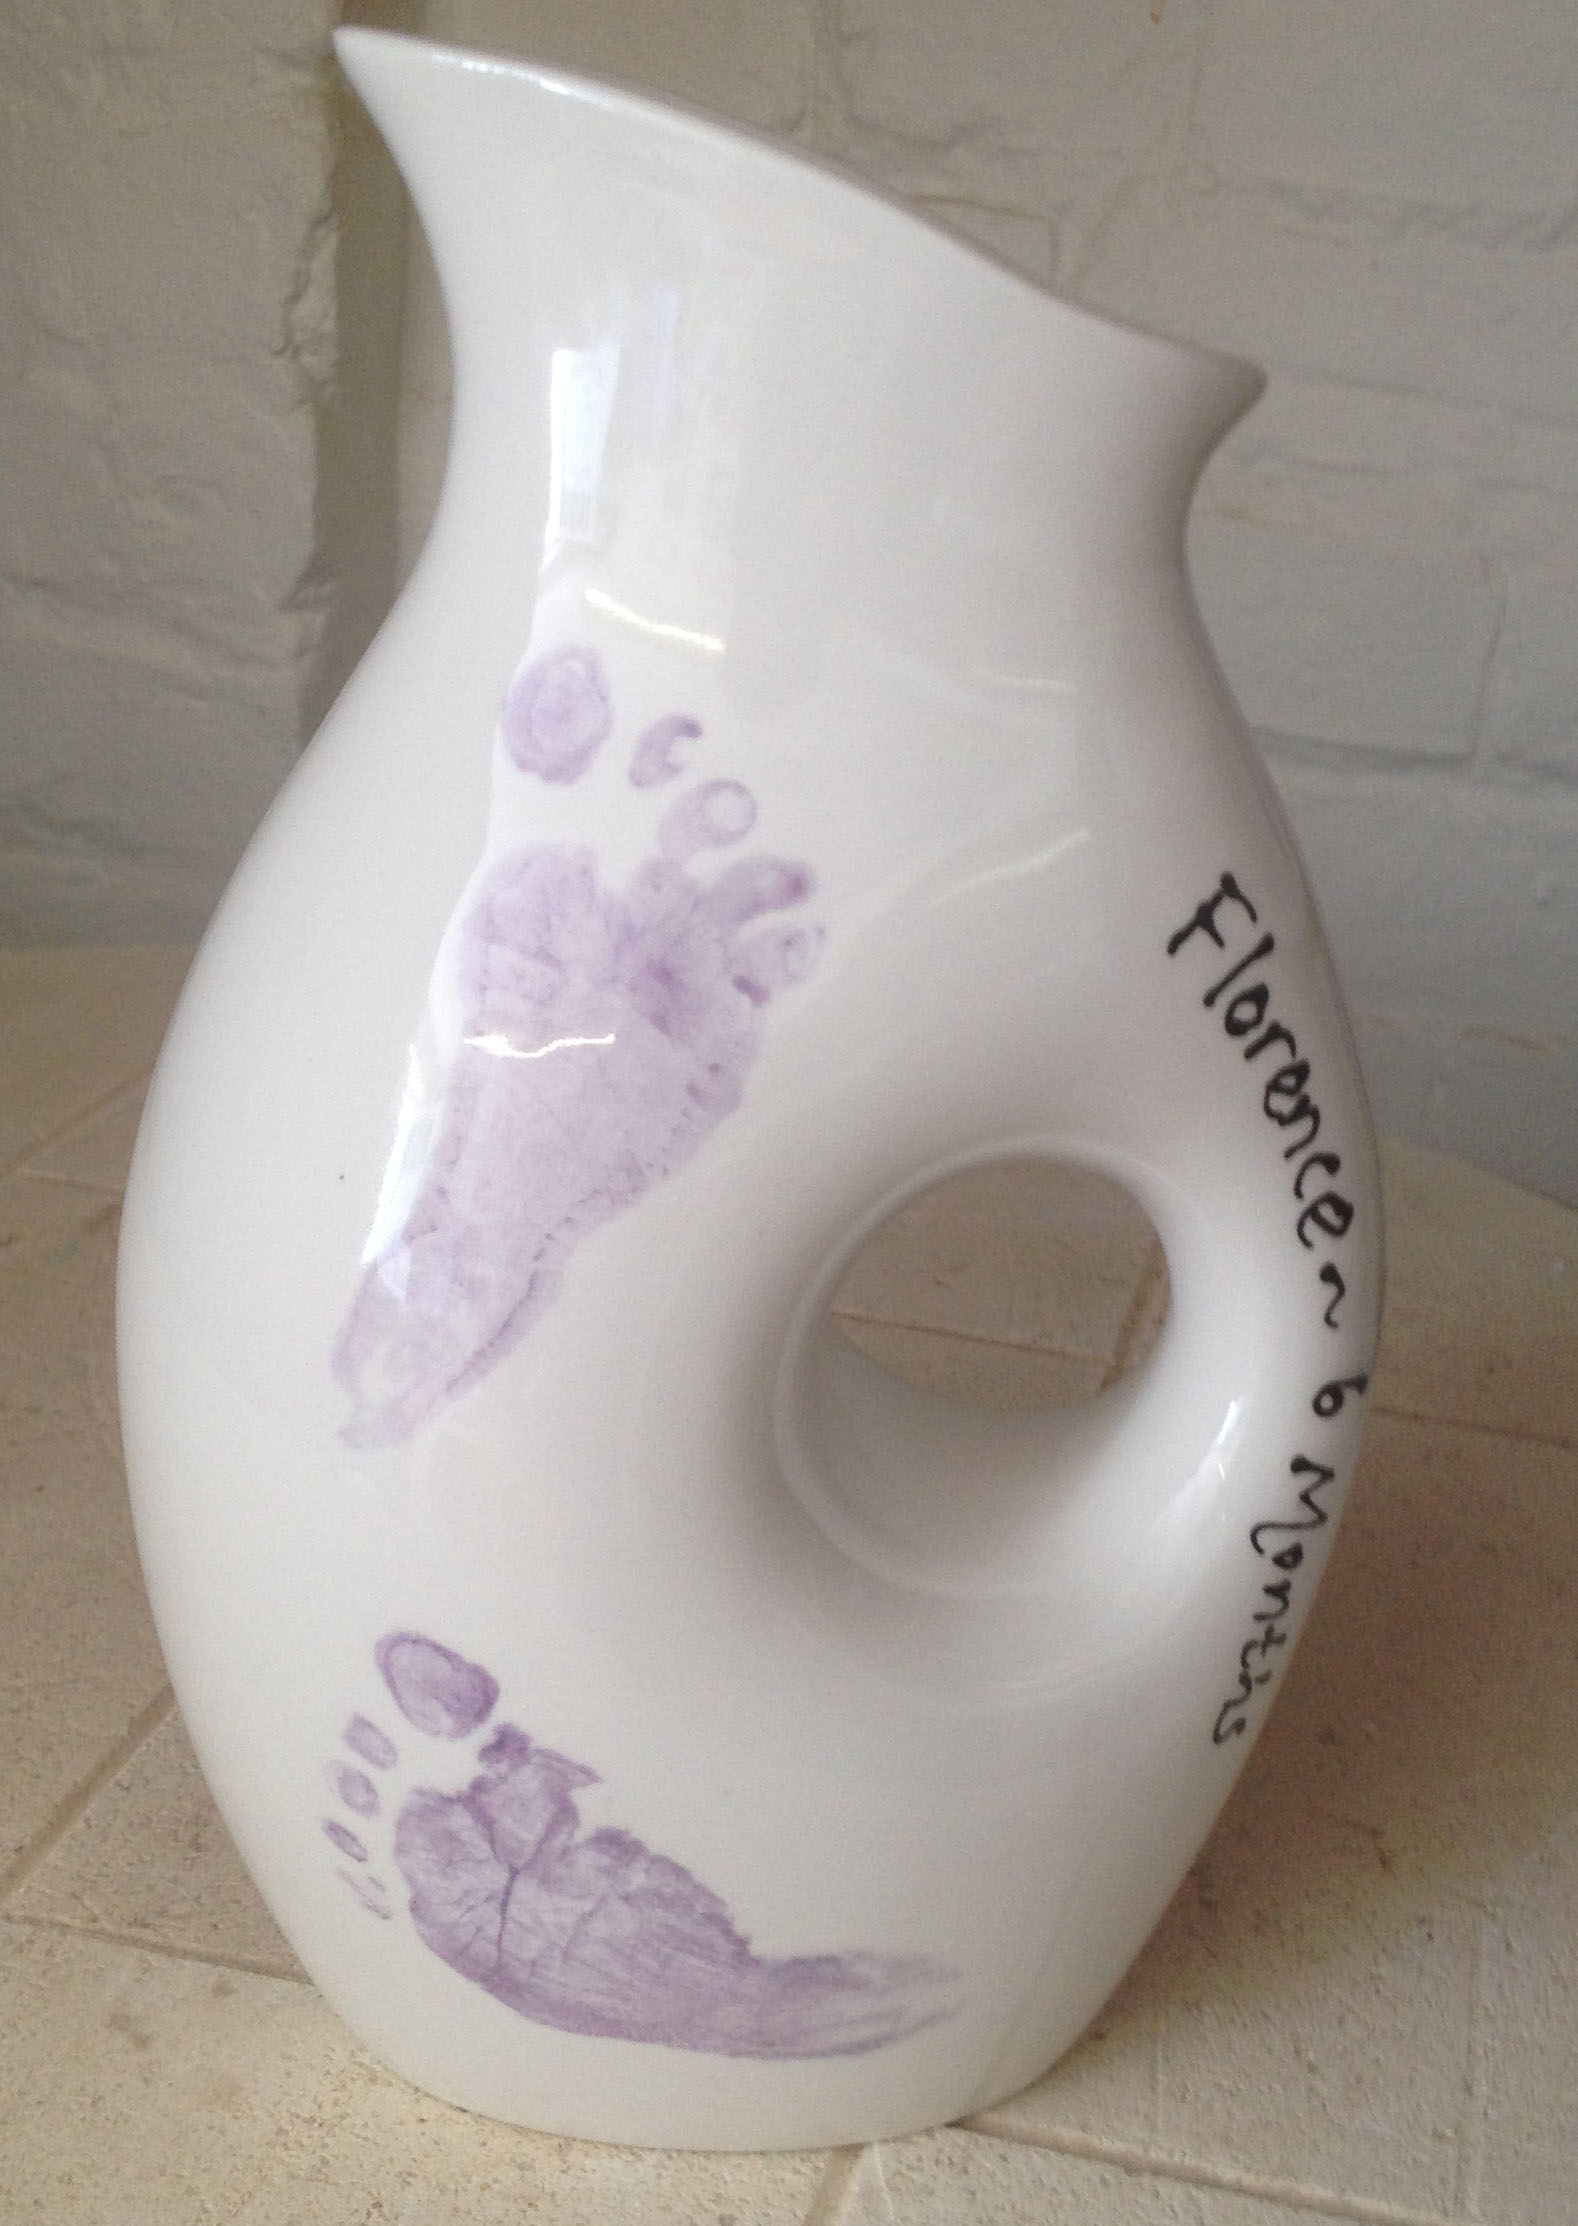 footprint on vase sevenoaks kent pottry ceramic clay painted